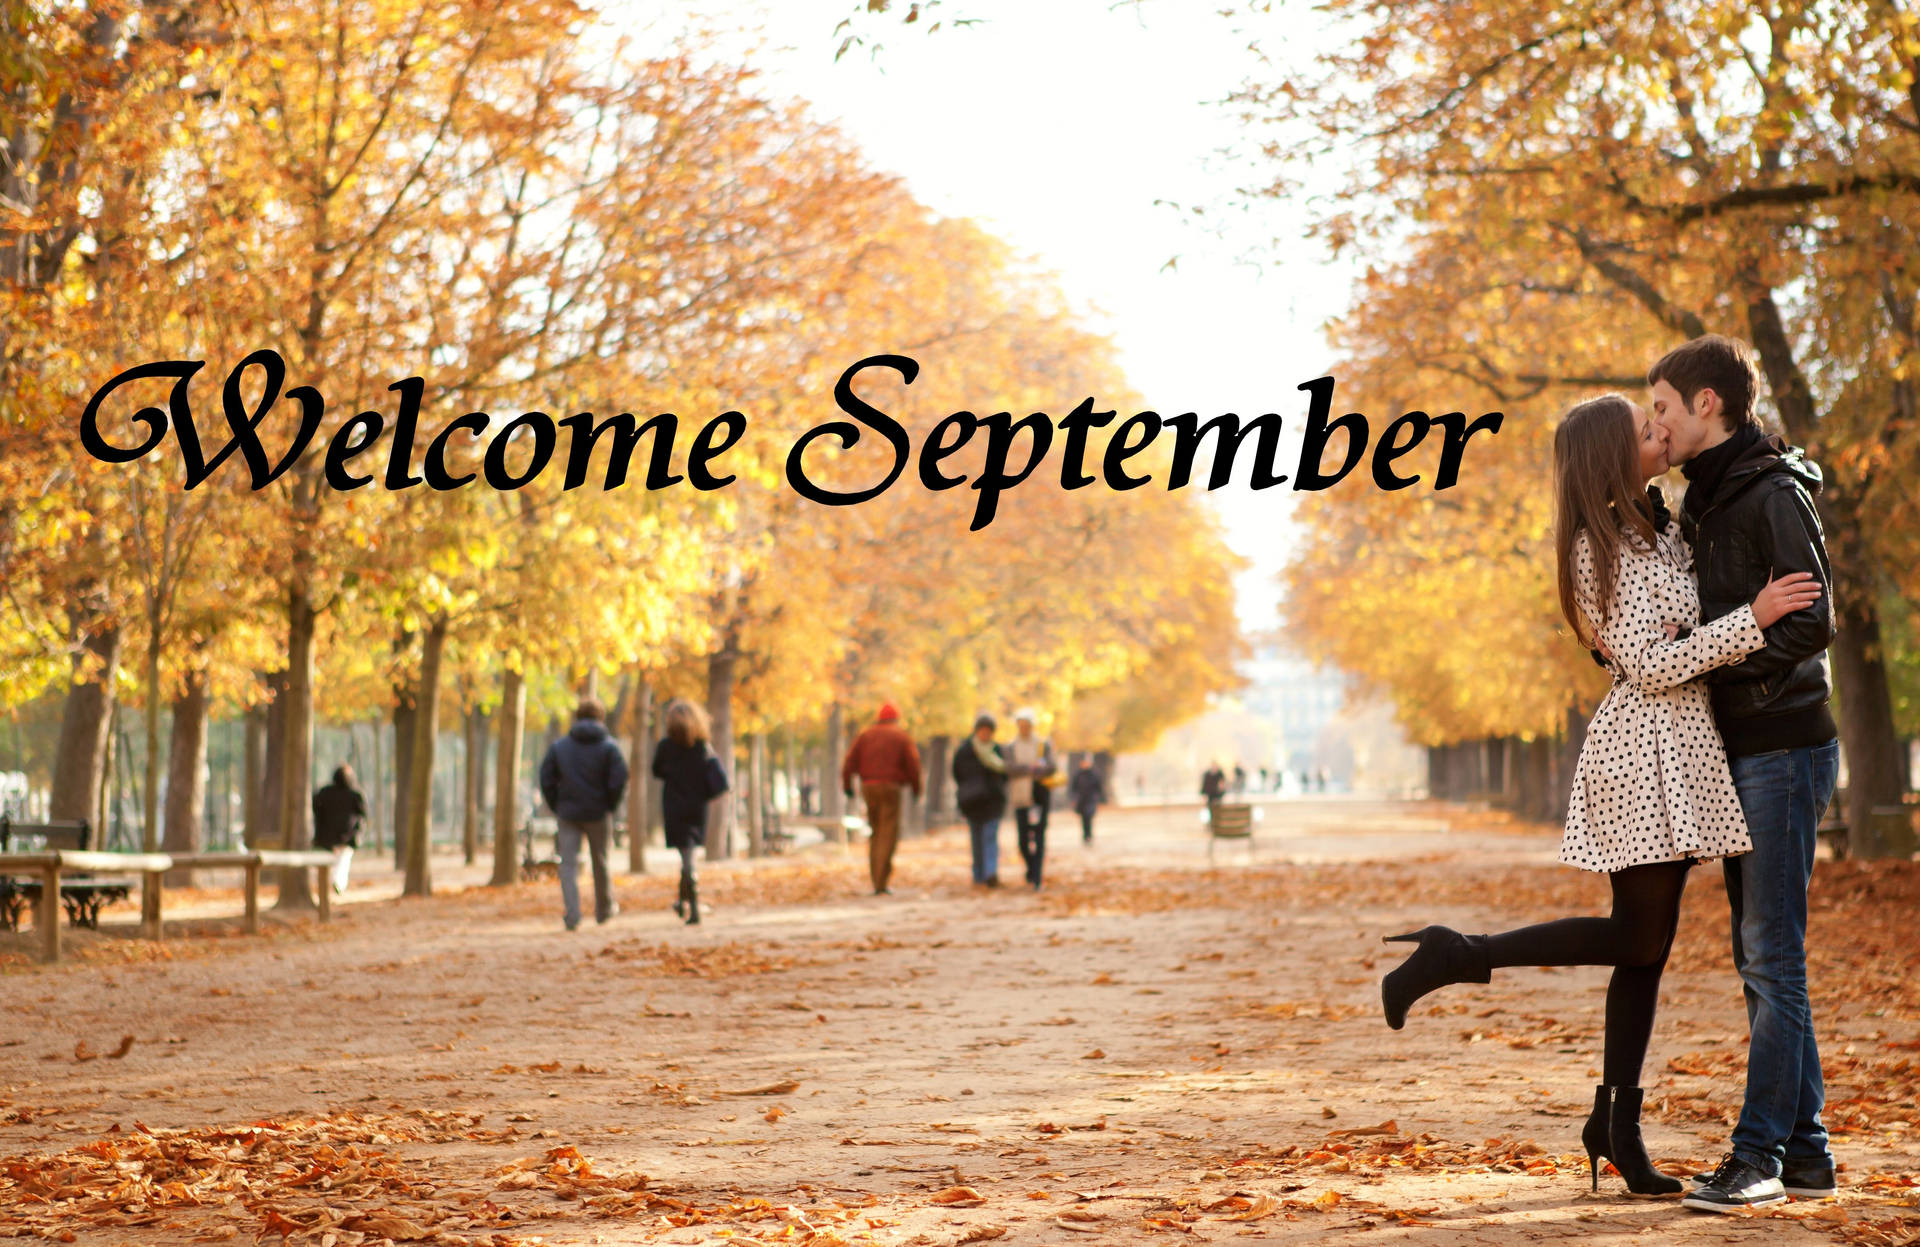 Welcome September!